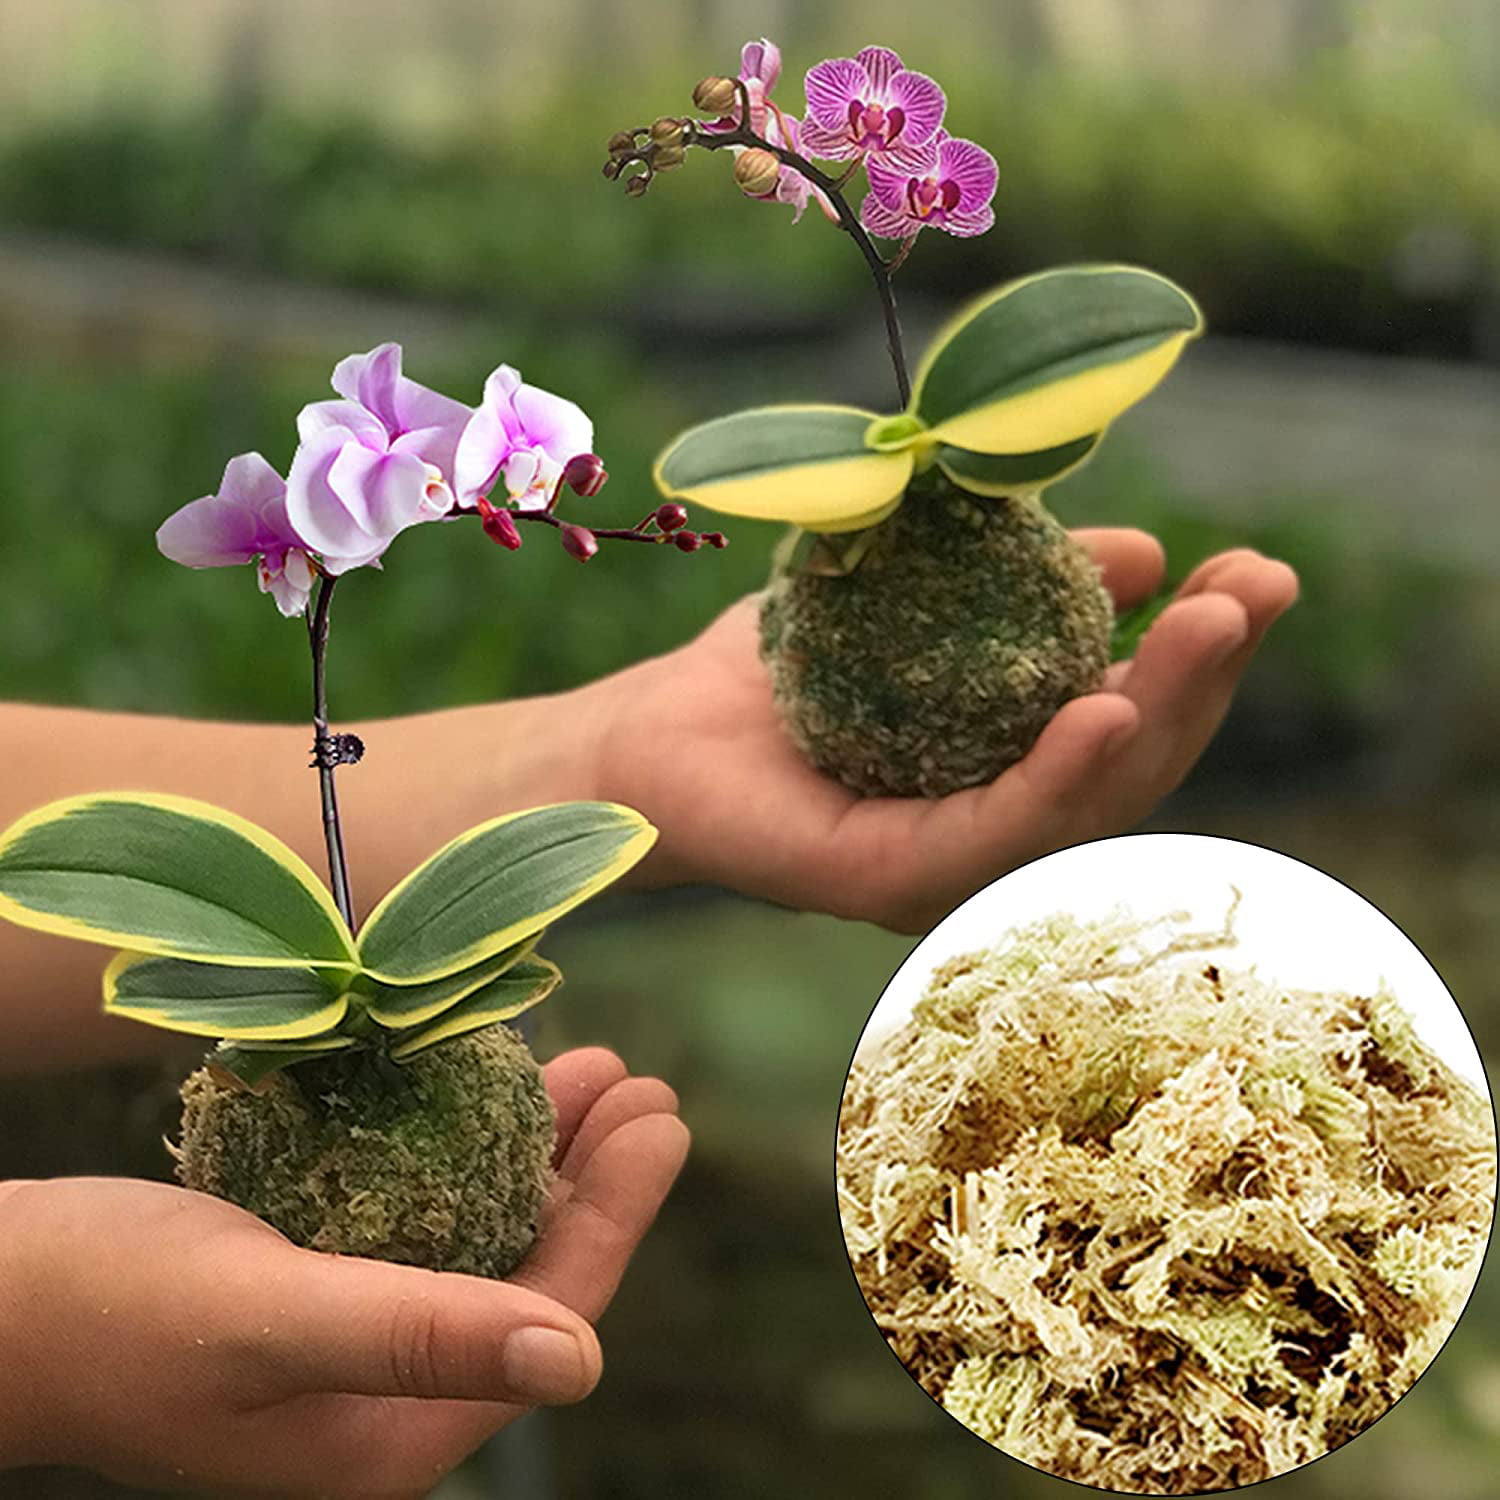 Soil Sunrise- 1qt Long Fibered Sphagnum Peat Moss, for Orchid, Carnivorous  Plant, Terrariums